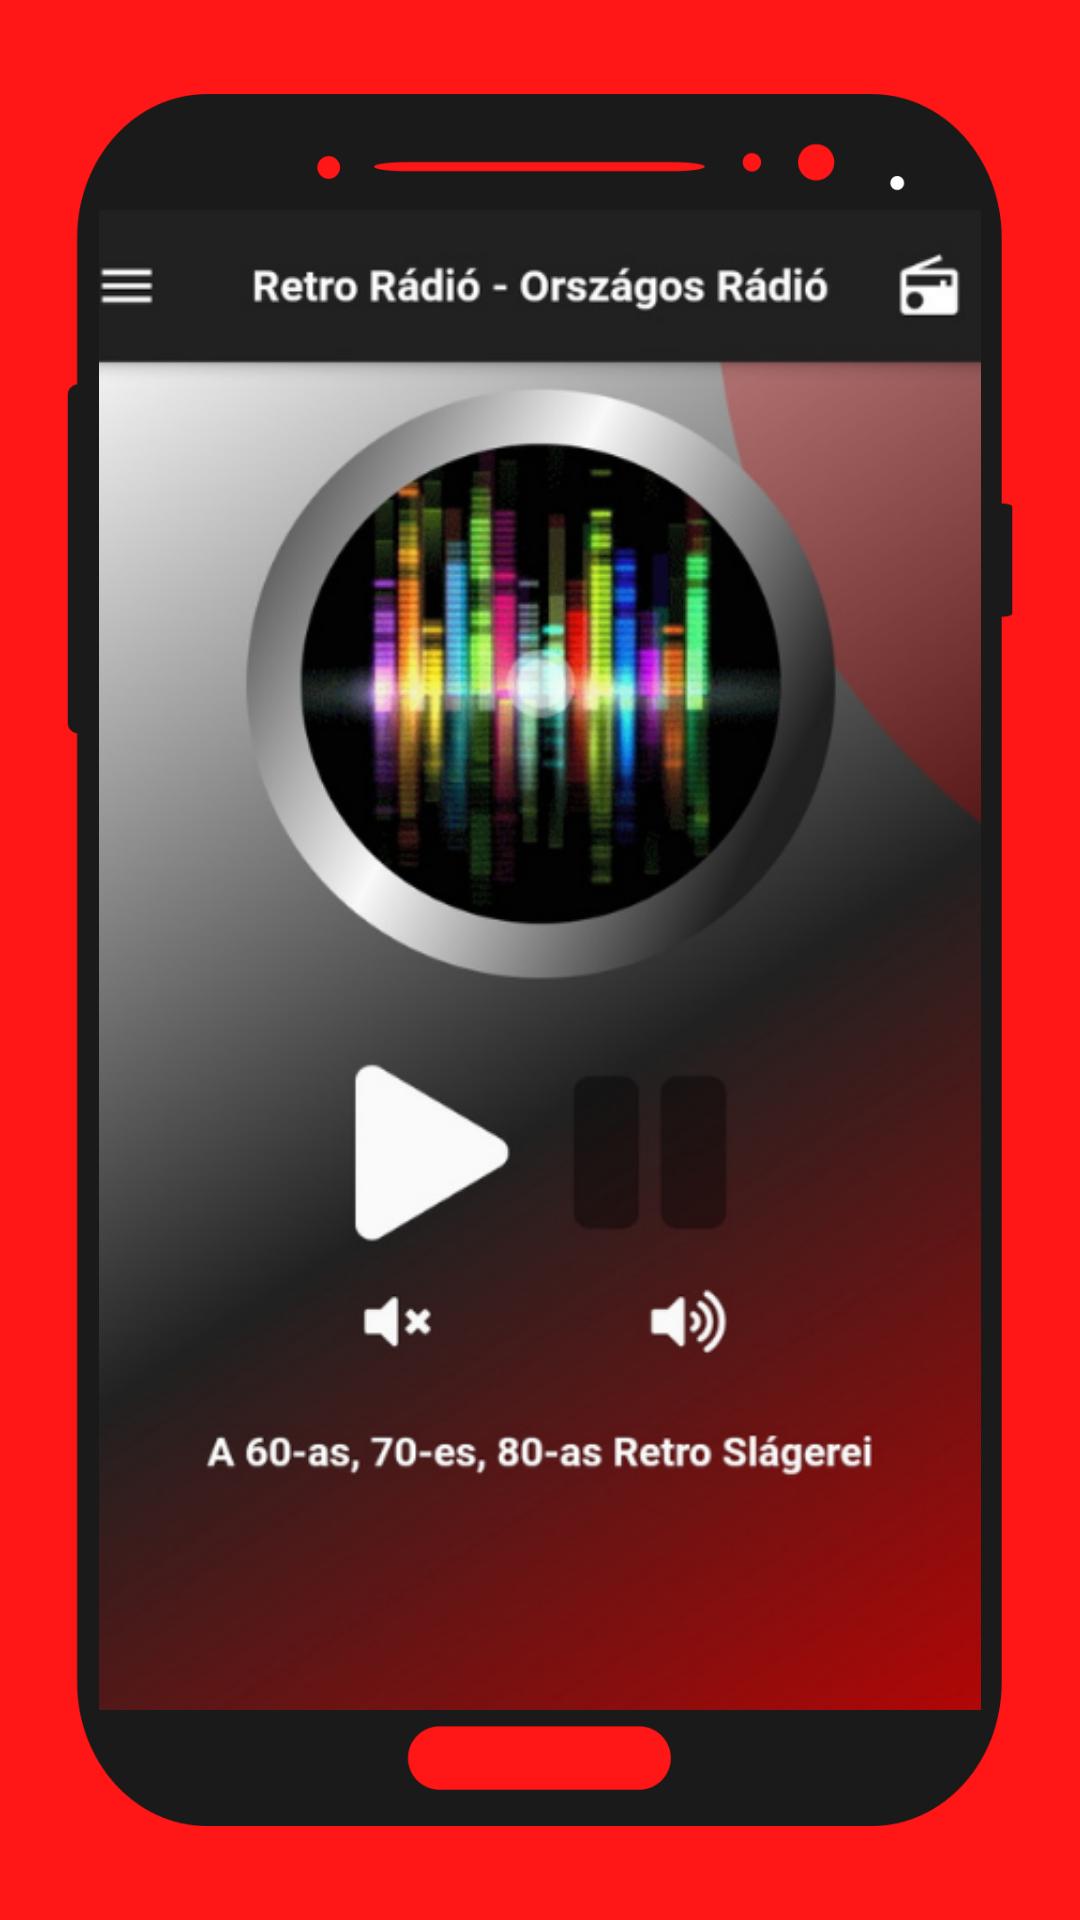 Retro Rádió Online Magyarorszá APK for Android Download